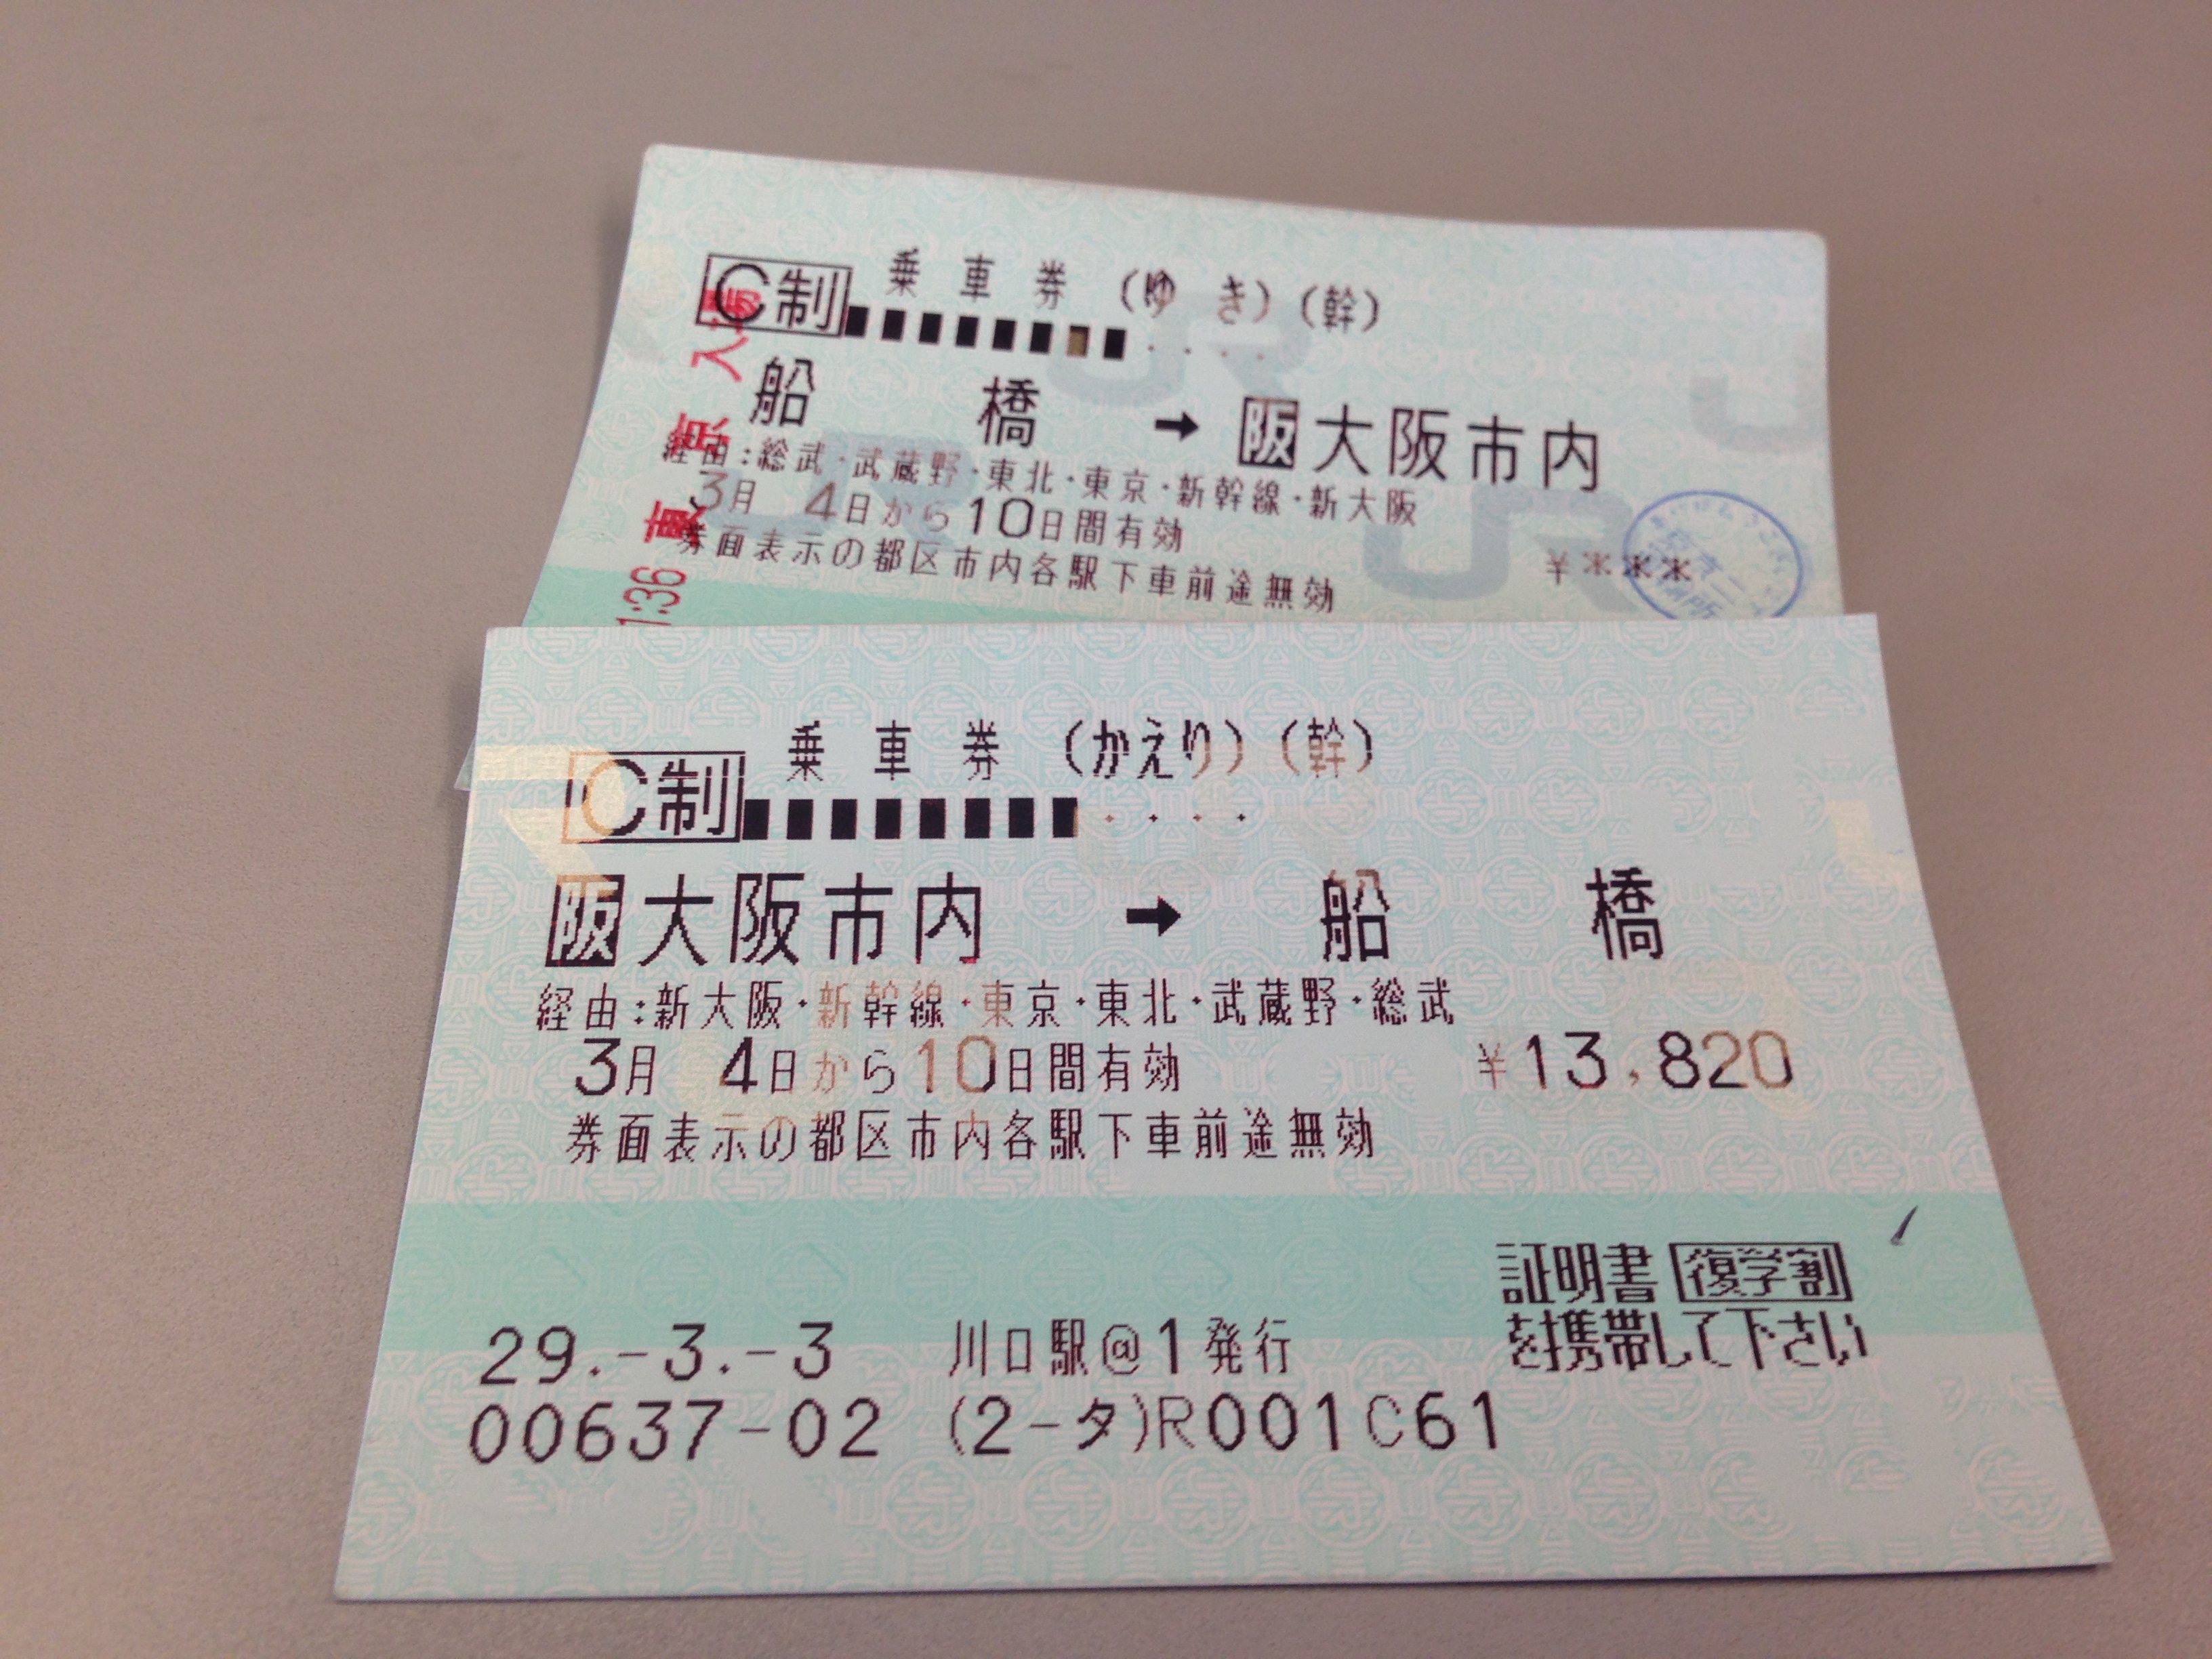 JR往復割引】東京〜大阪間を新幹線で移動する場合「JRの往復割引」を 